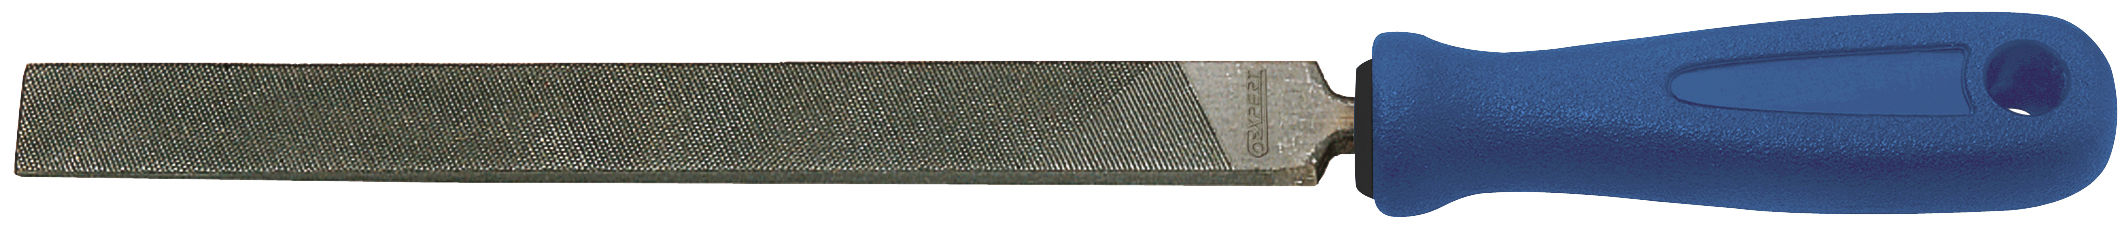 1.E020602 Platte vijl halfzoet - 200mm